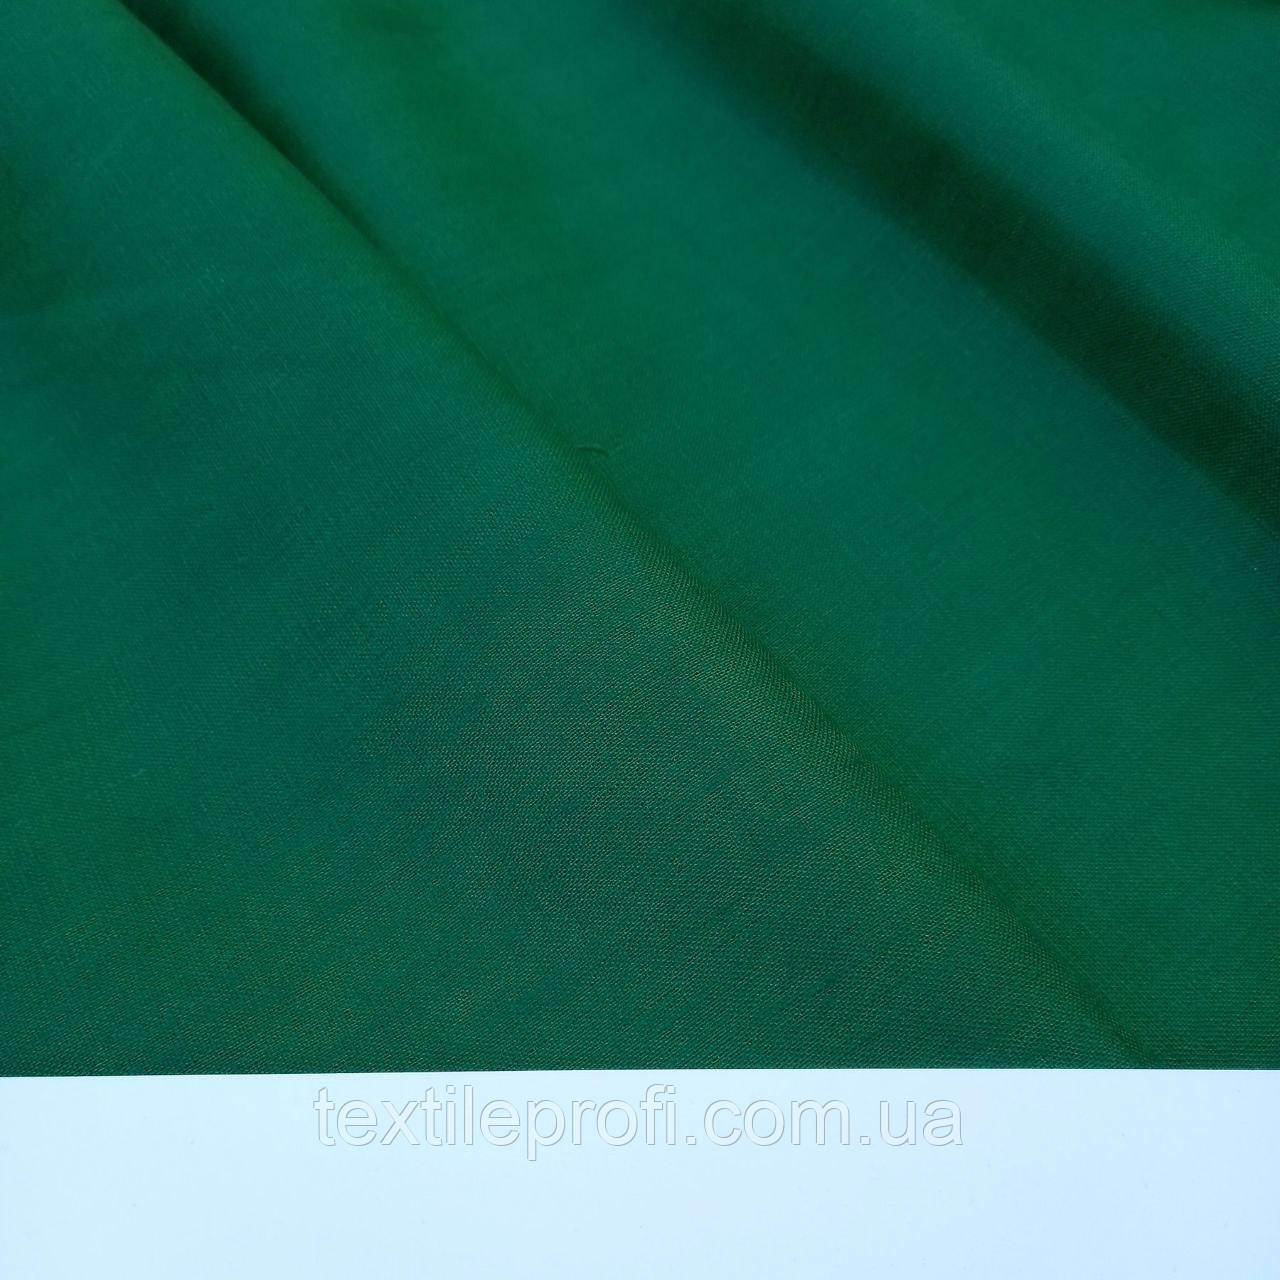 Костюмна льняна тканина зеленого кольору